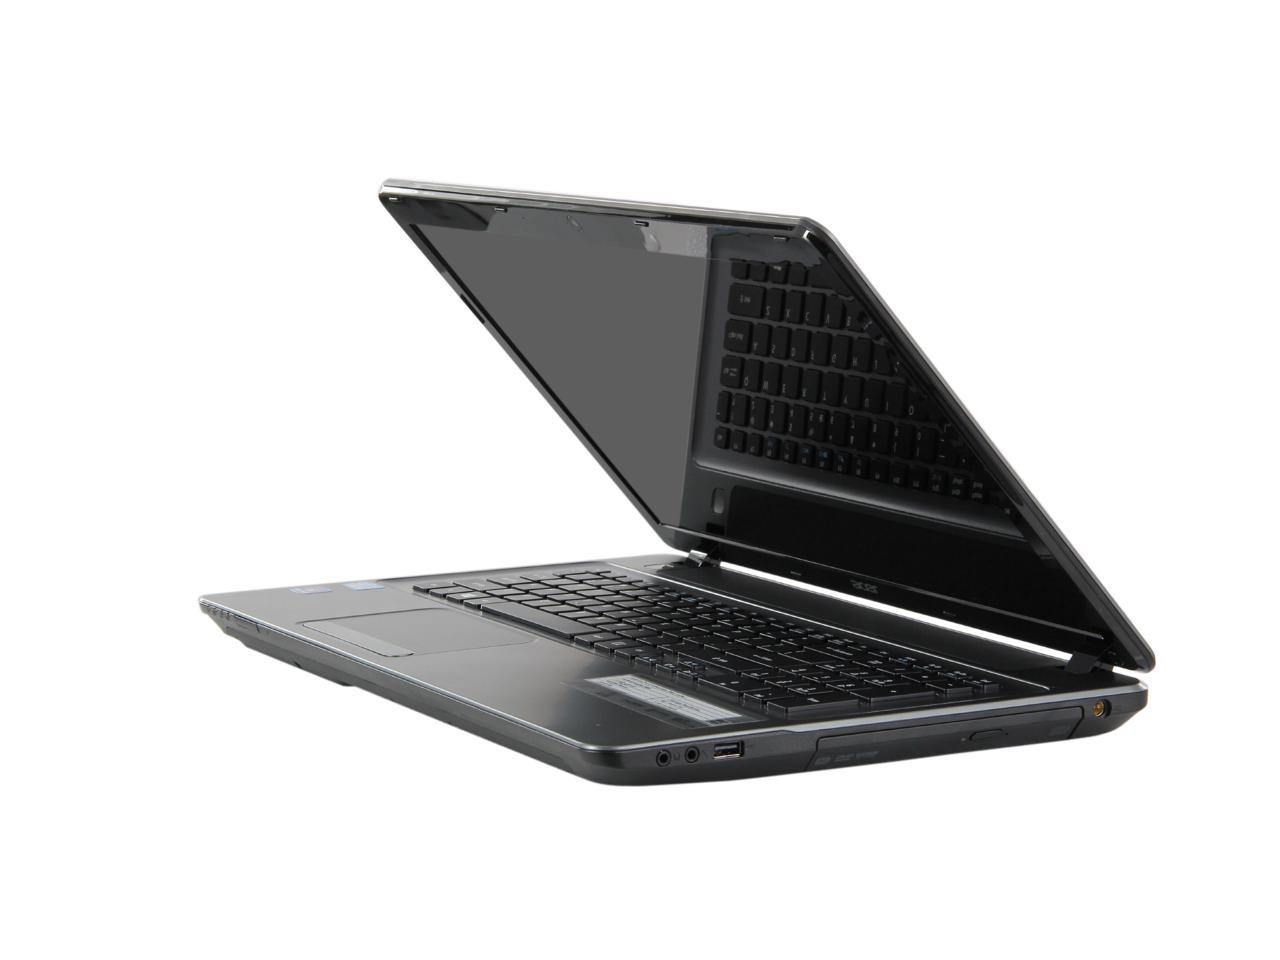 Serial ATA Internal Hard Drive for the Acer Aspire 5110 Notebook/Laptop 500GB SATA